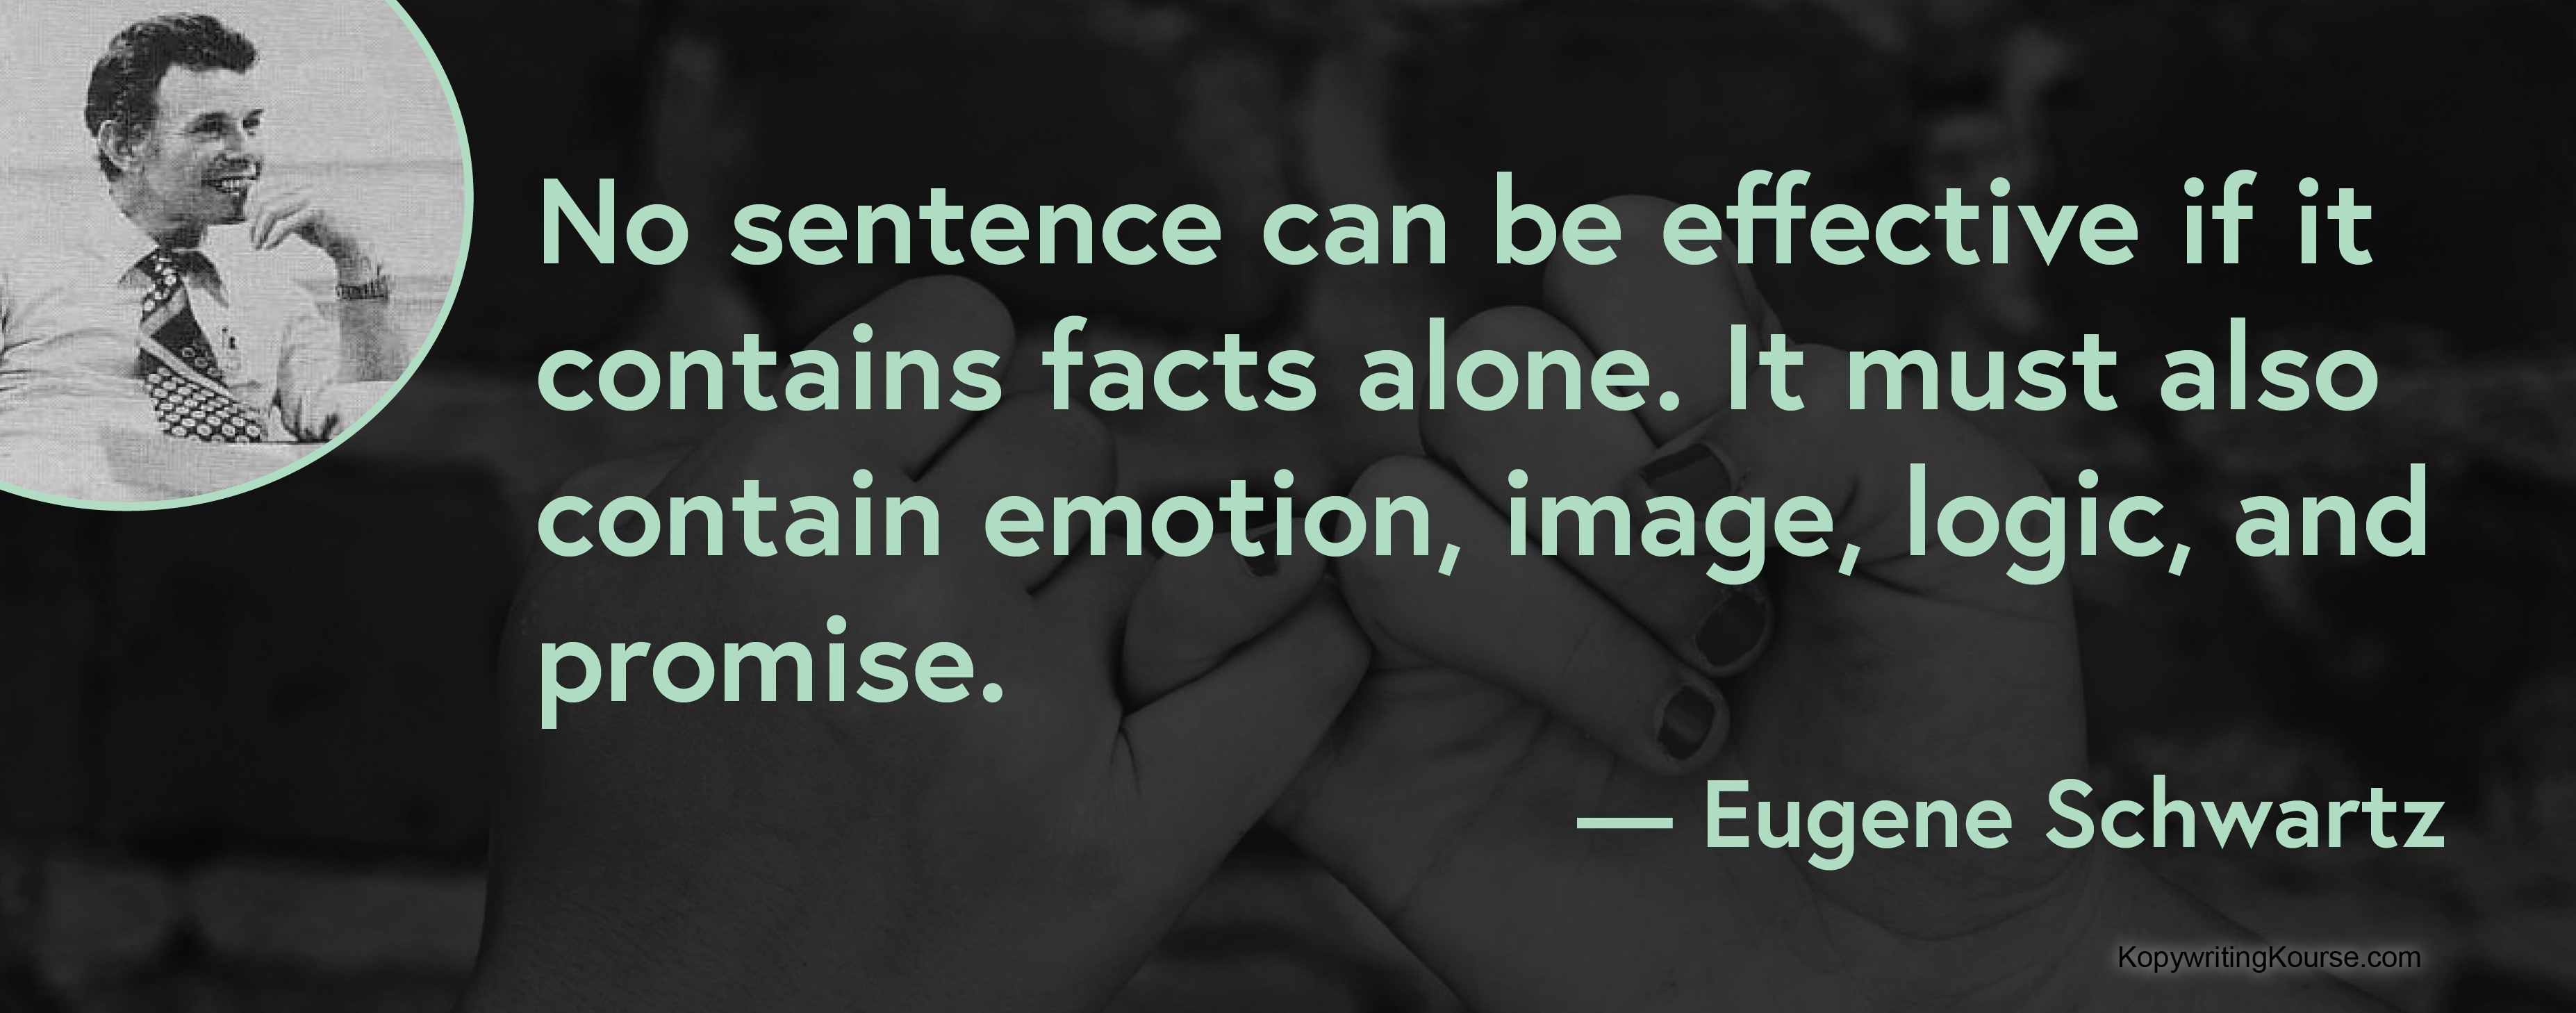 Eugene Schwartz quote on creating an effective sentence